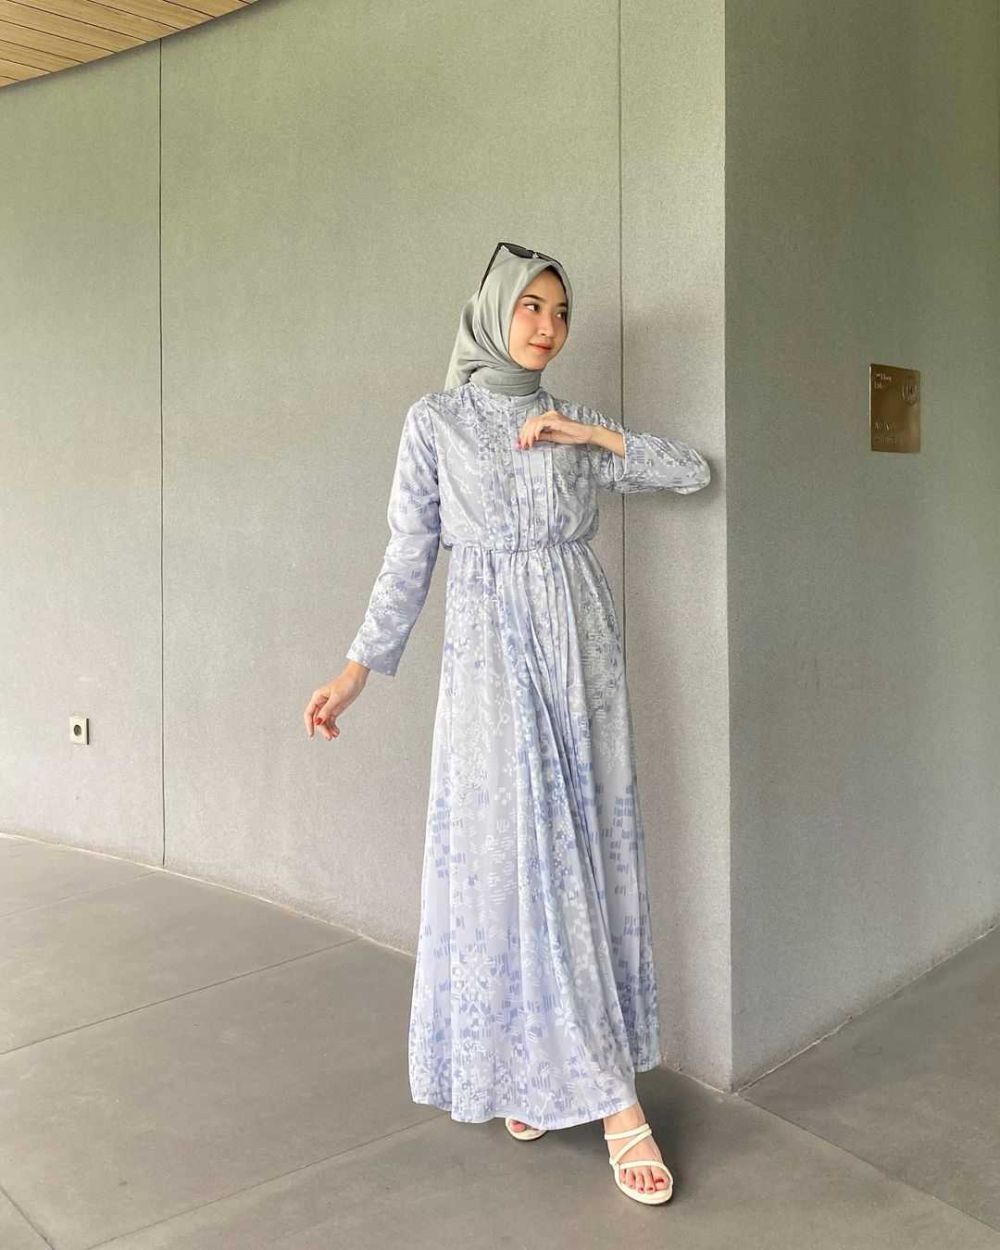 10 Ide Hijab Style dengan Outfit Dress ala Zahra Suci, Effortless!